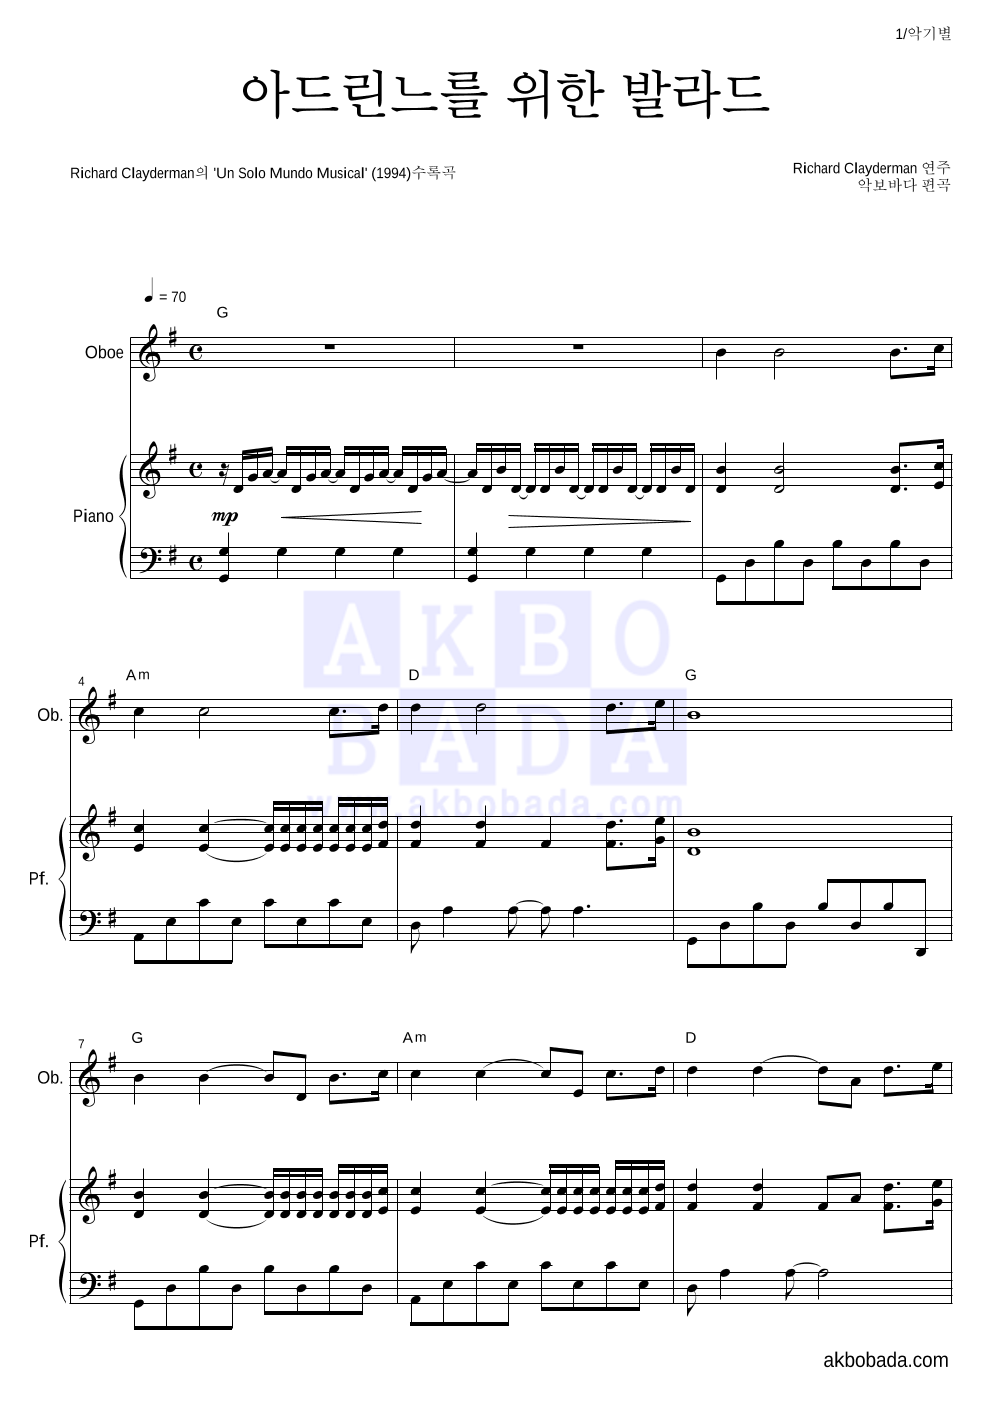 Richard Clayderman  - 아드린느를 위한 발라드 오보에&피아노 악보 